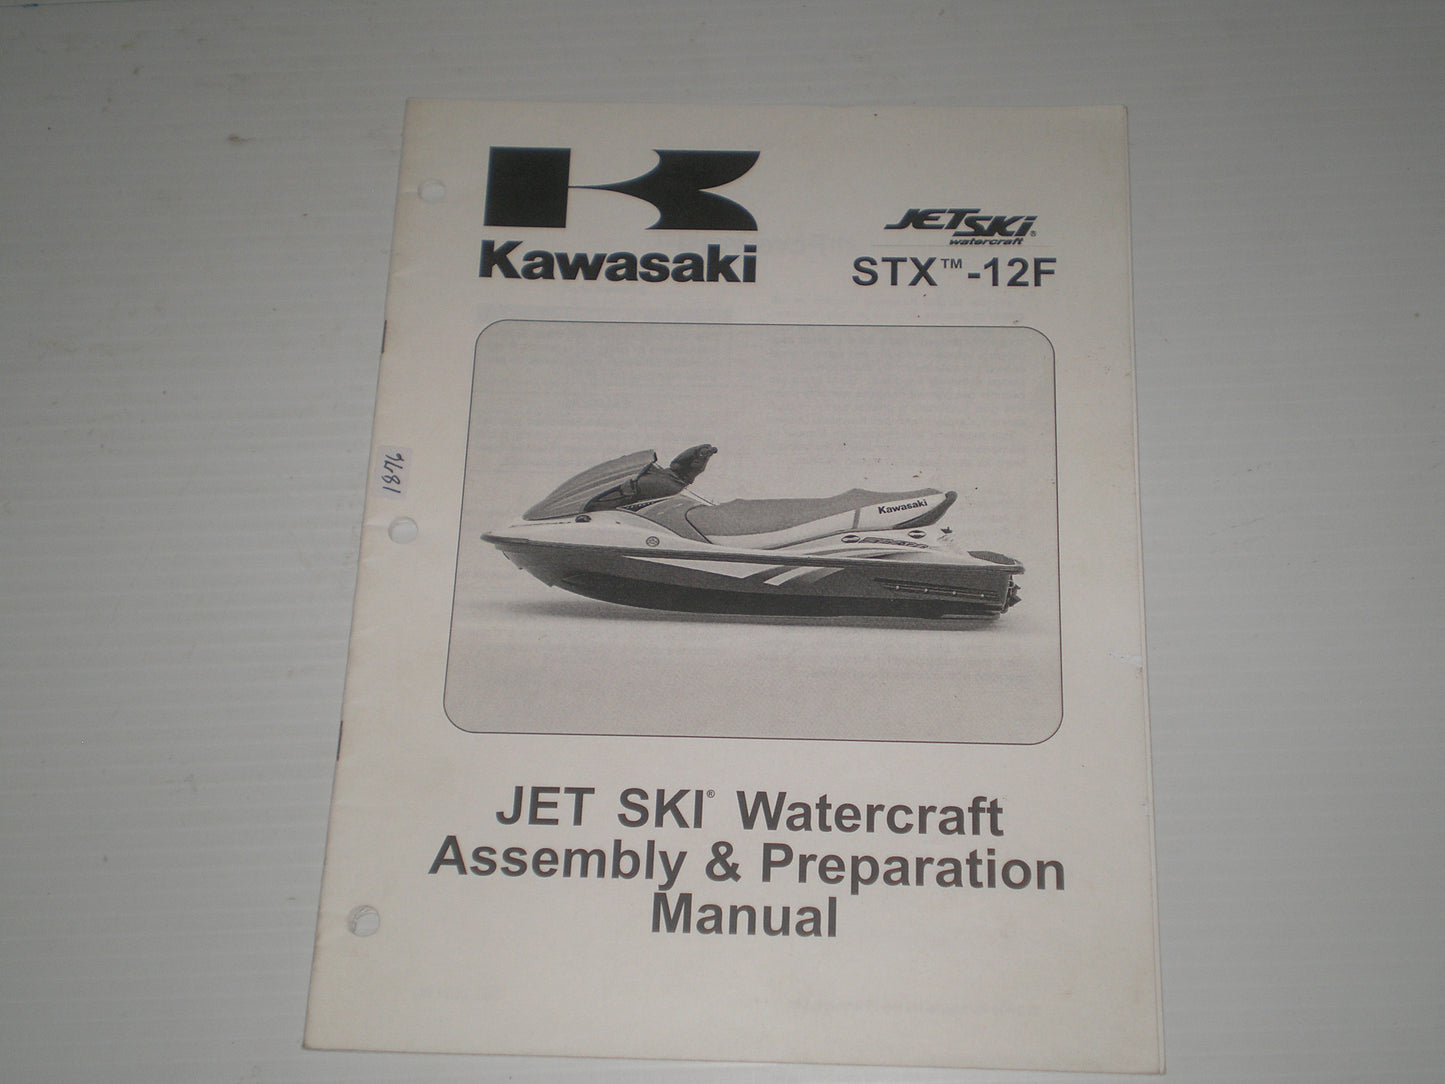 KAWASAKI STX-12F / JT1200 D1 2005  Jet Ski  Assembly & Preparation Manual  99931-1441-01  #1876